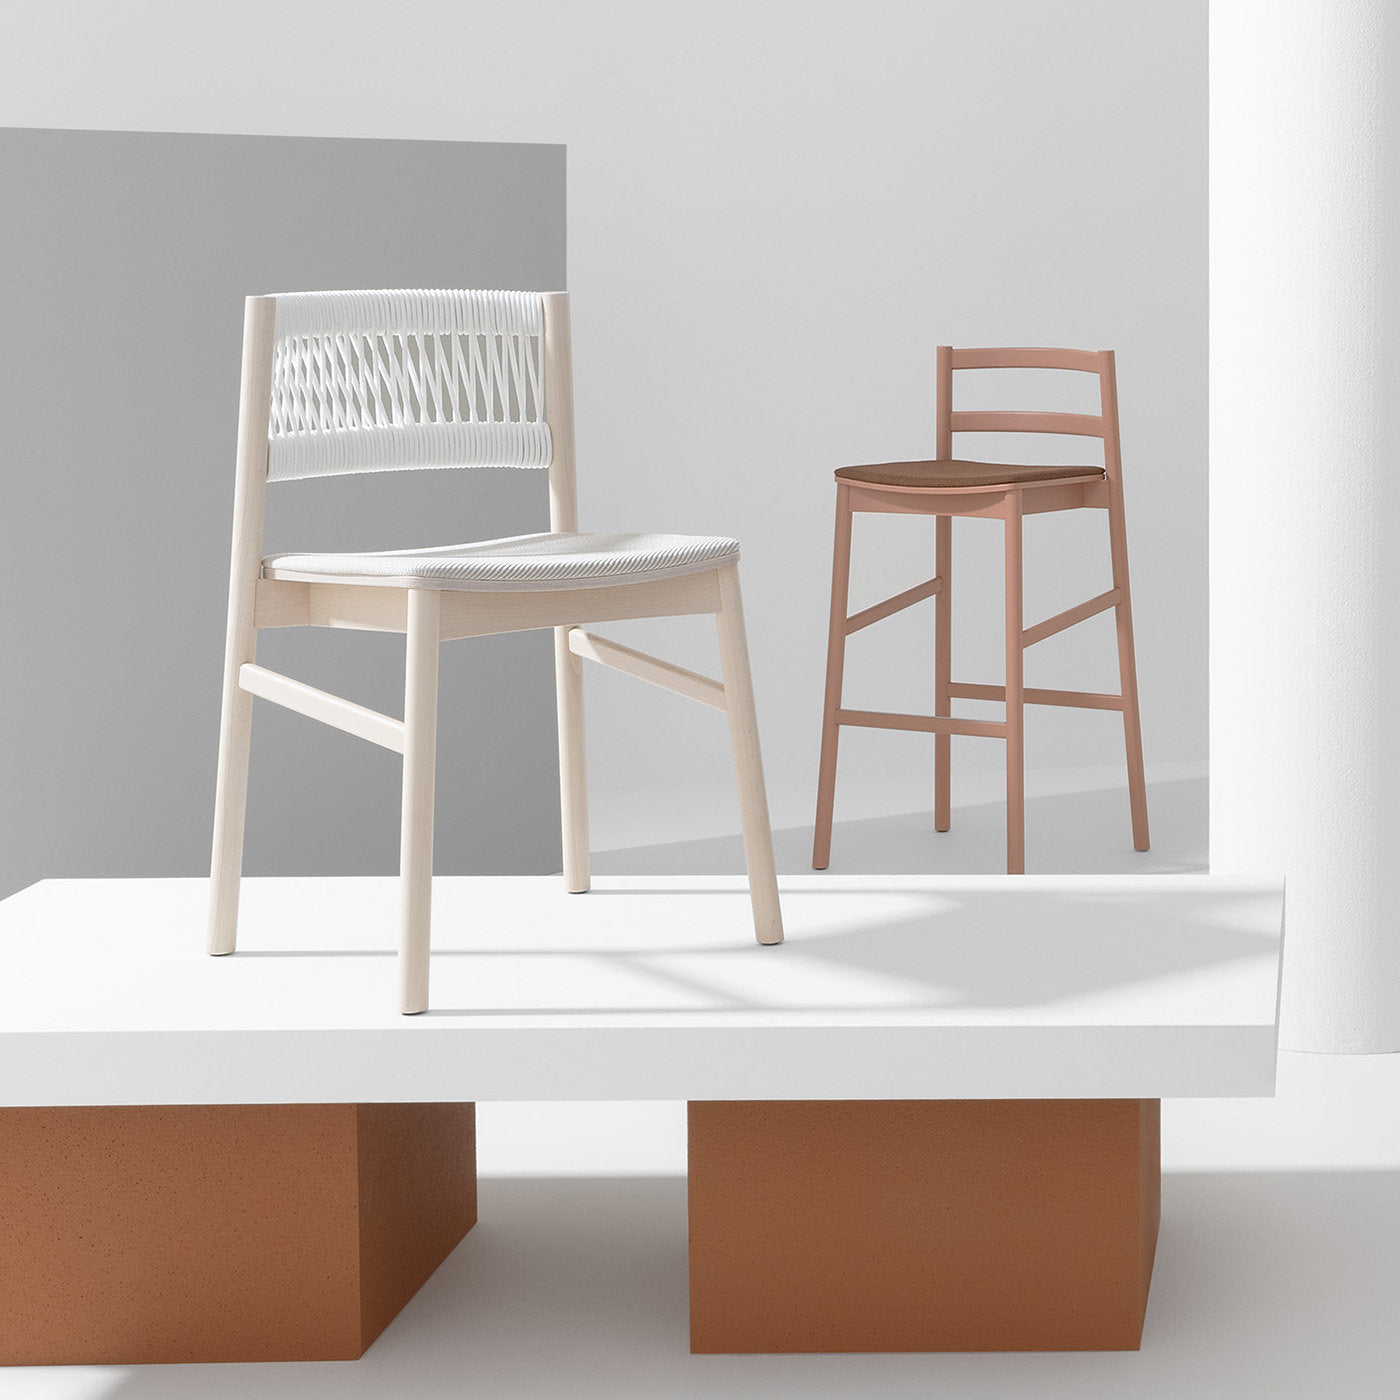 Load 647 White Chair by Emilio Nanni - Alternative view 1